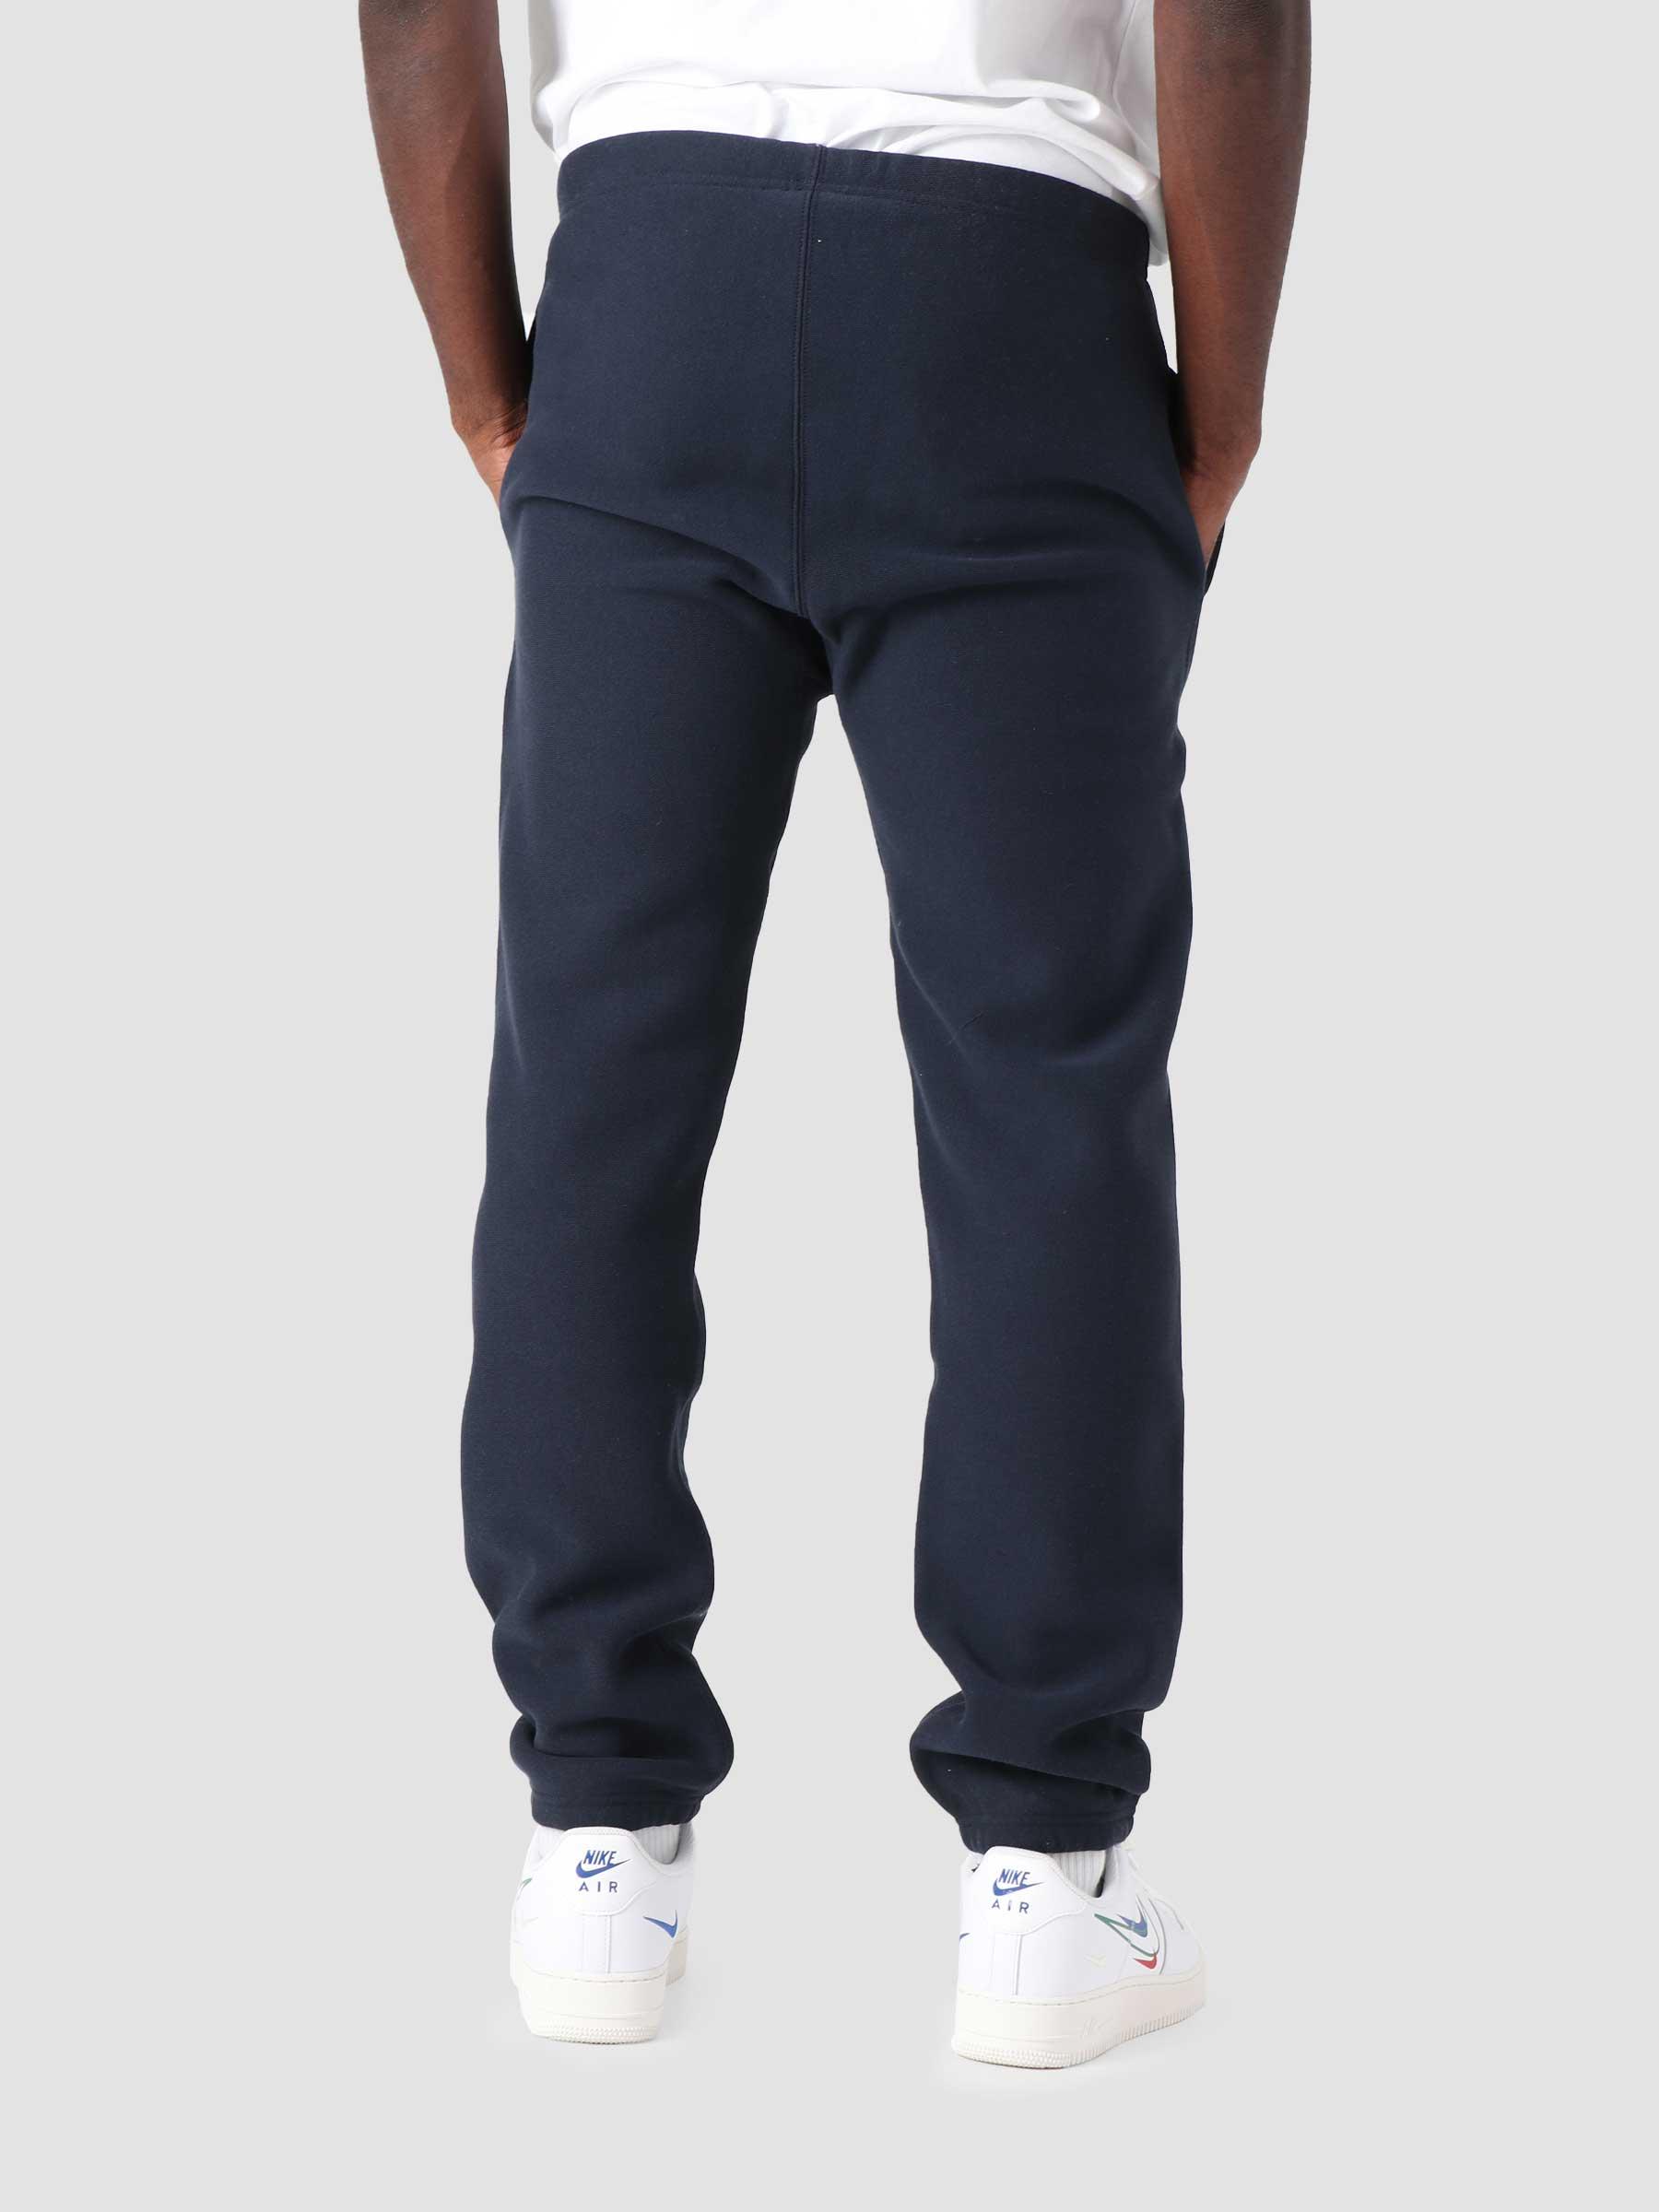 Reverse Weave Soft Fleece Elastic Cuff Pants Navy COKFQ7-BS501